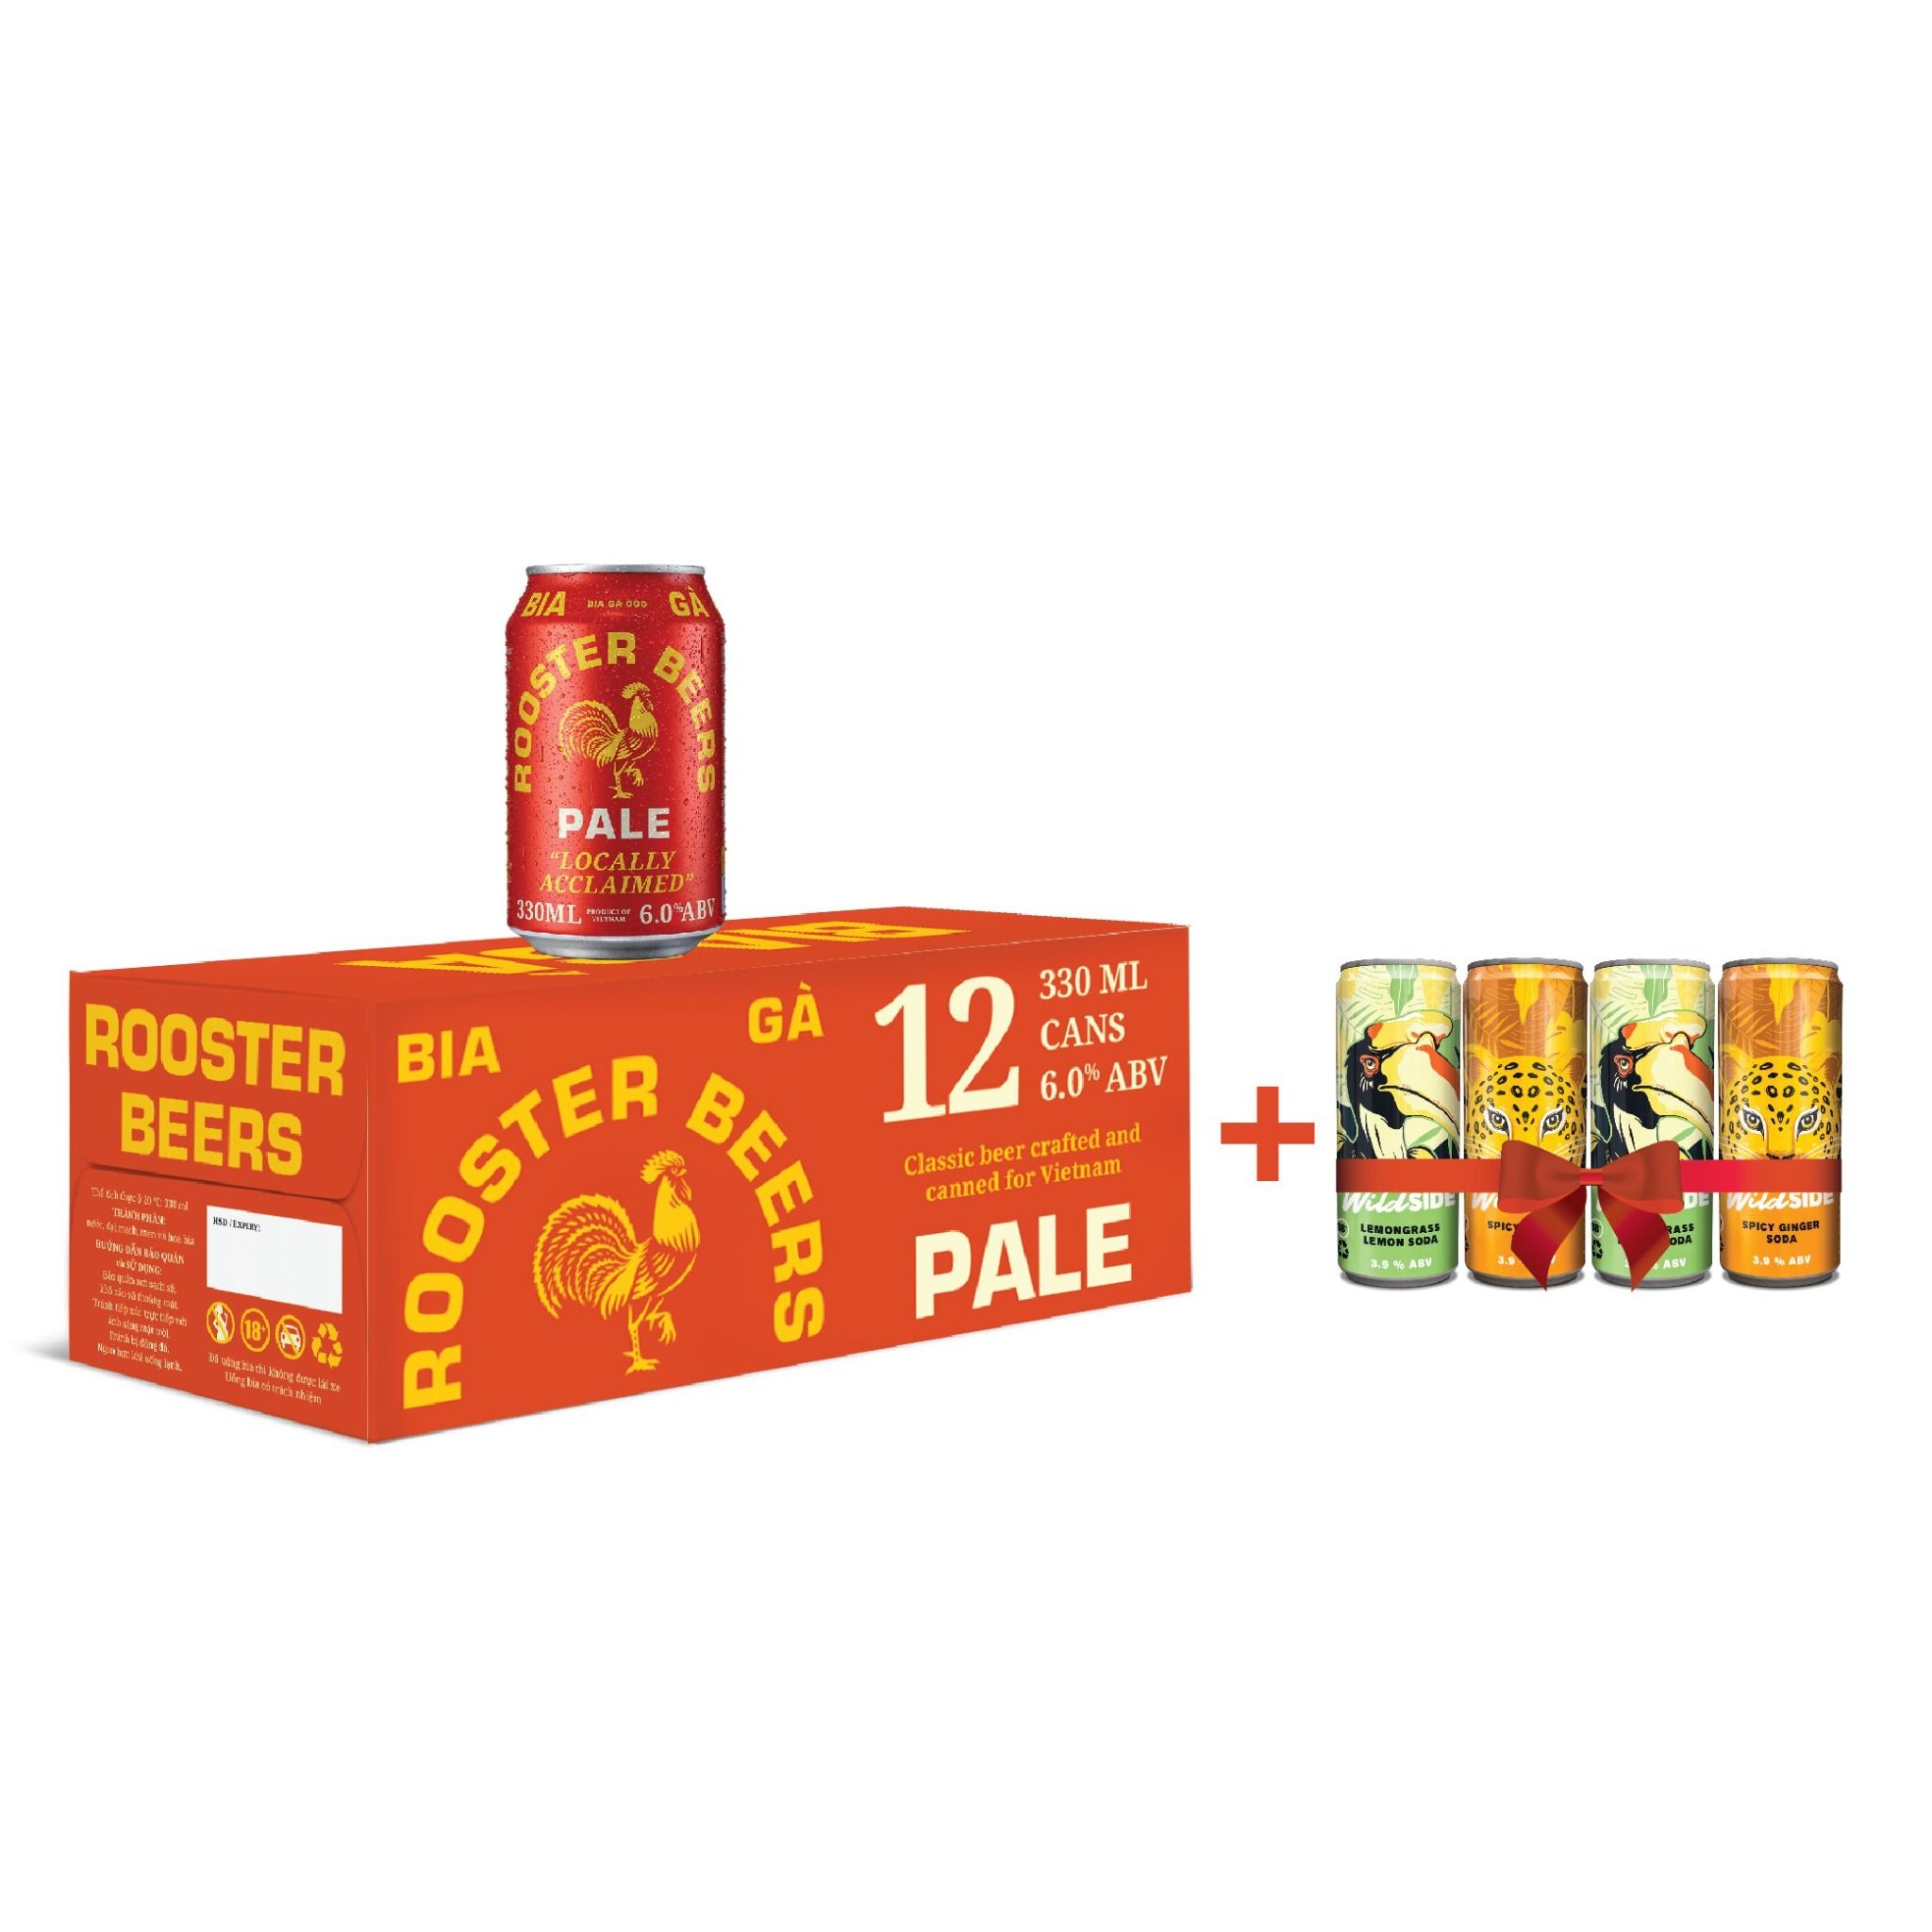  [TẶNG 4 LON SODA] Rooster Beers Pale - Thùng 12 Lon (330ml) 